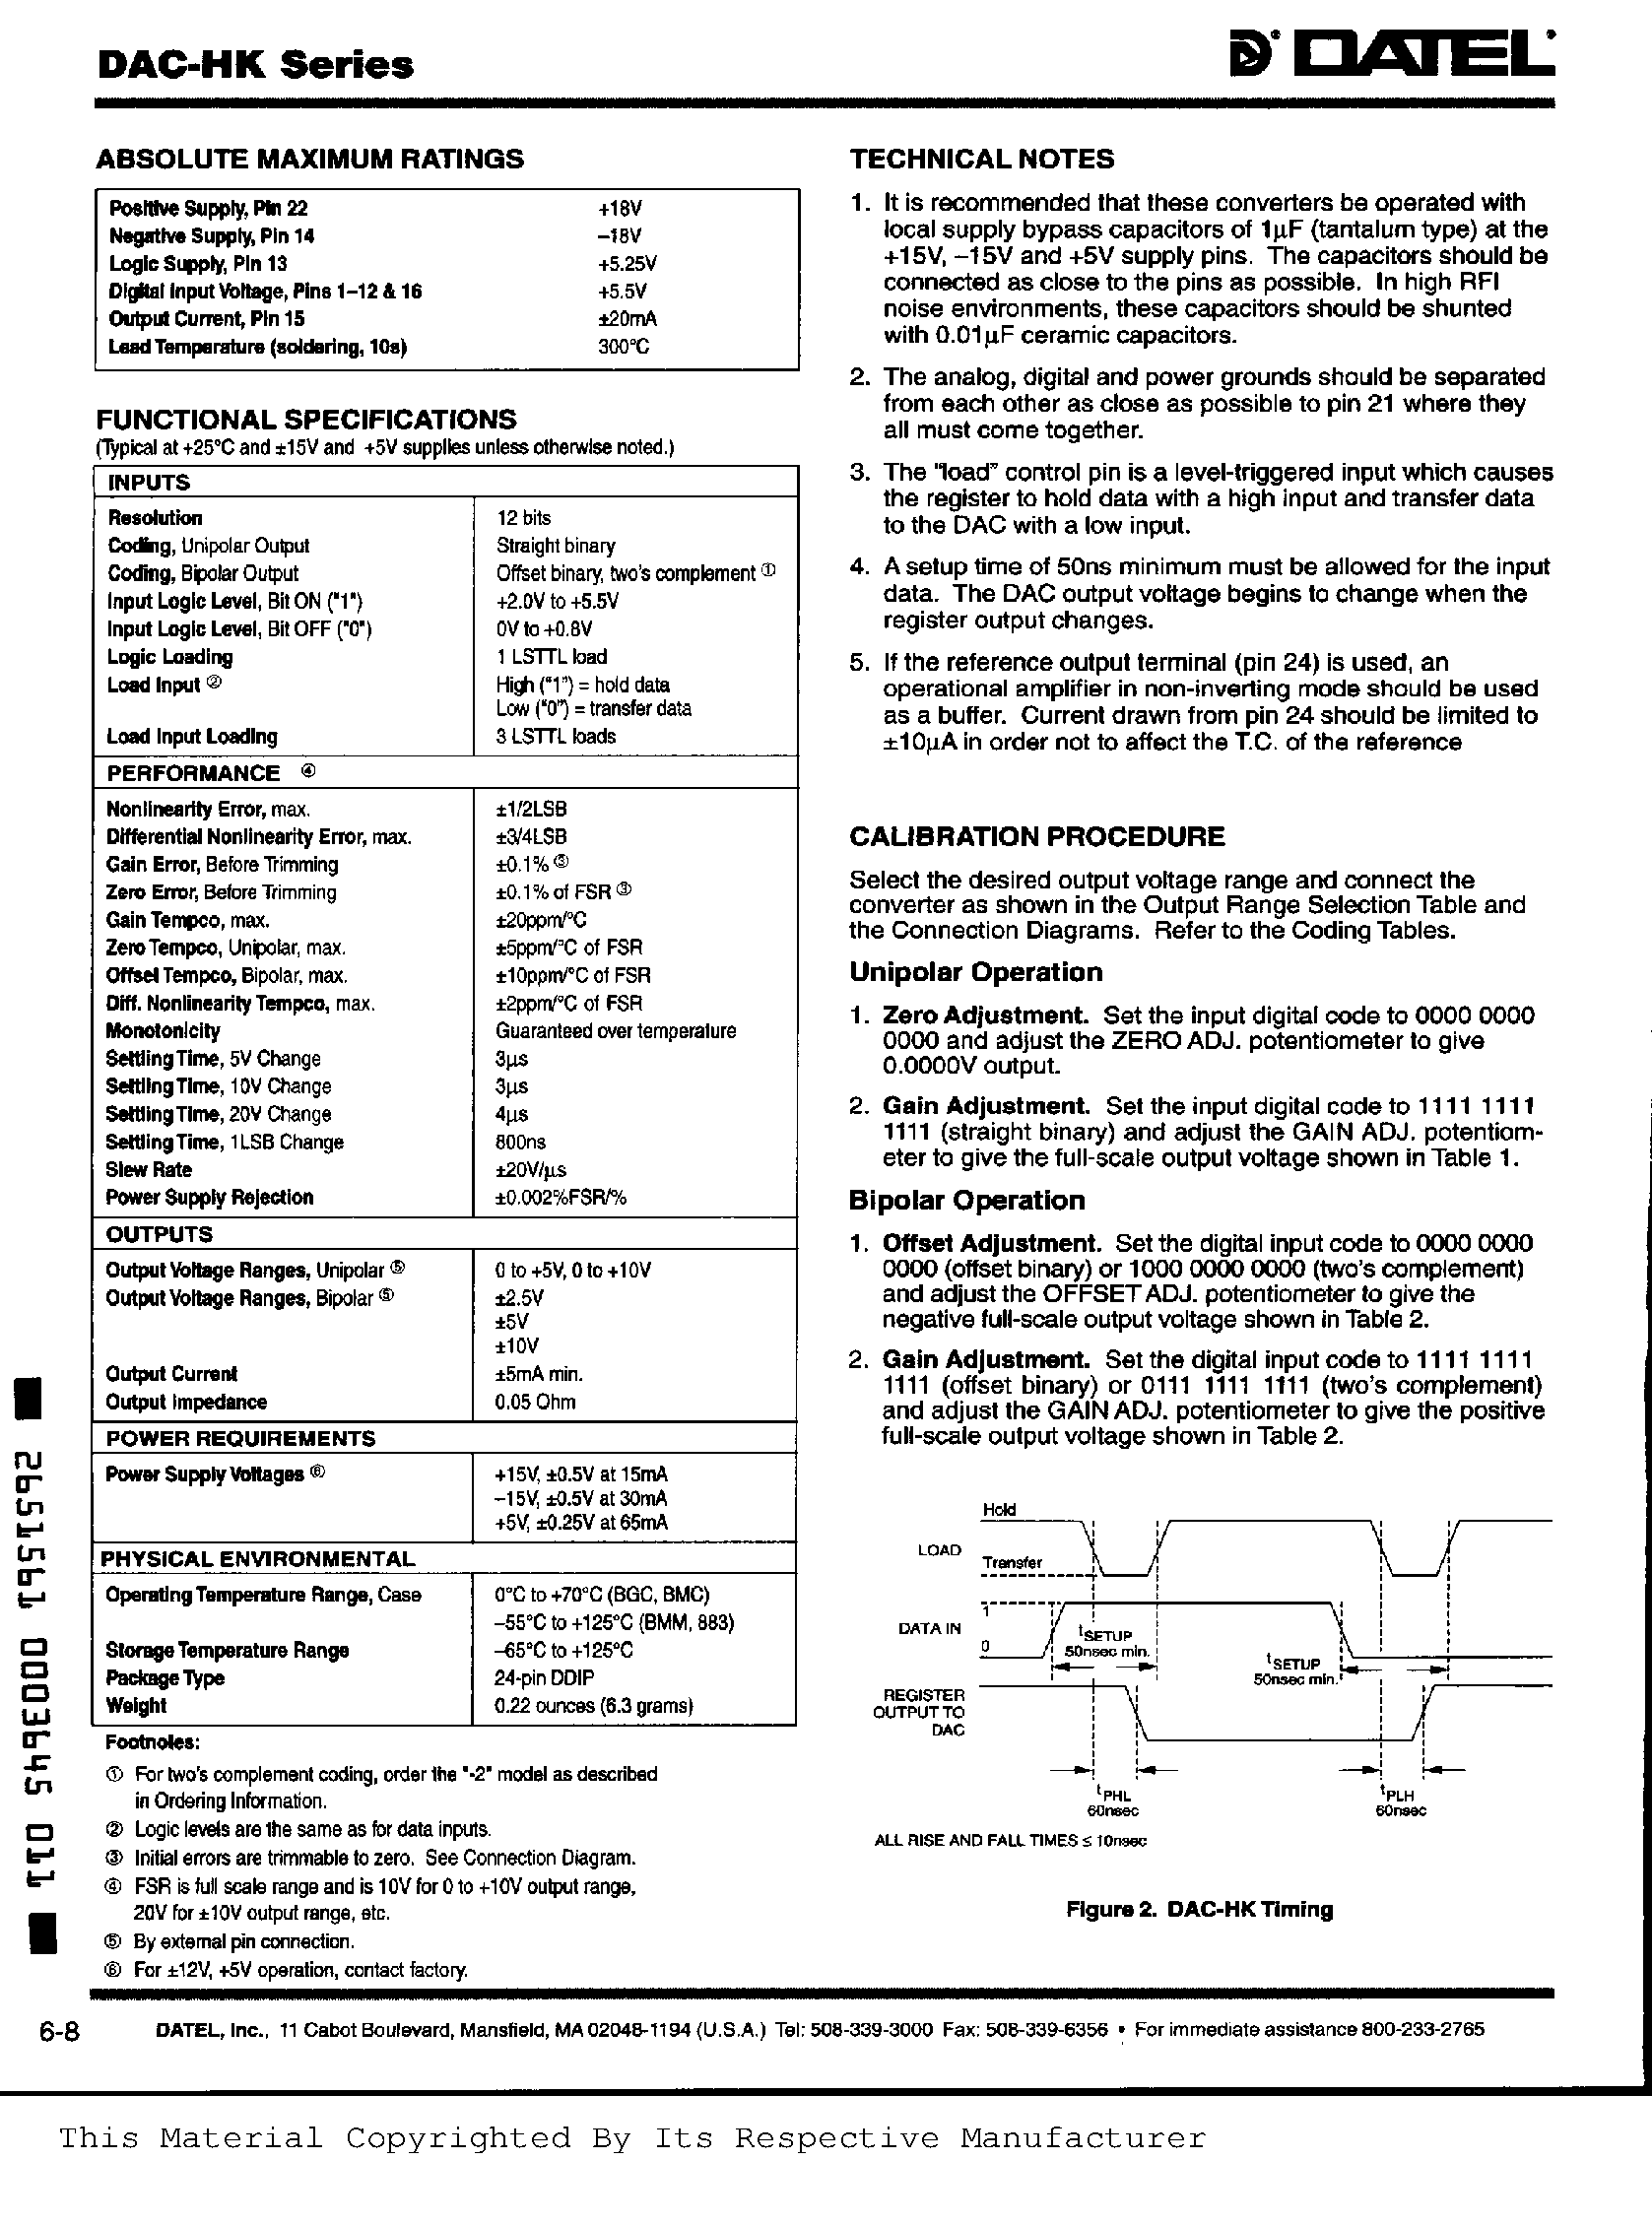 Datasheet DAC-HK12BGC-2 - HIGH PERFORMANCE 12 BIT DAC WITH INPUT REGISTERS page 2